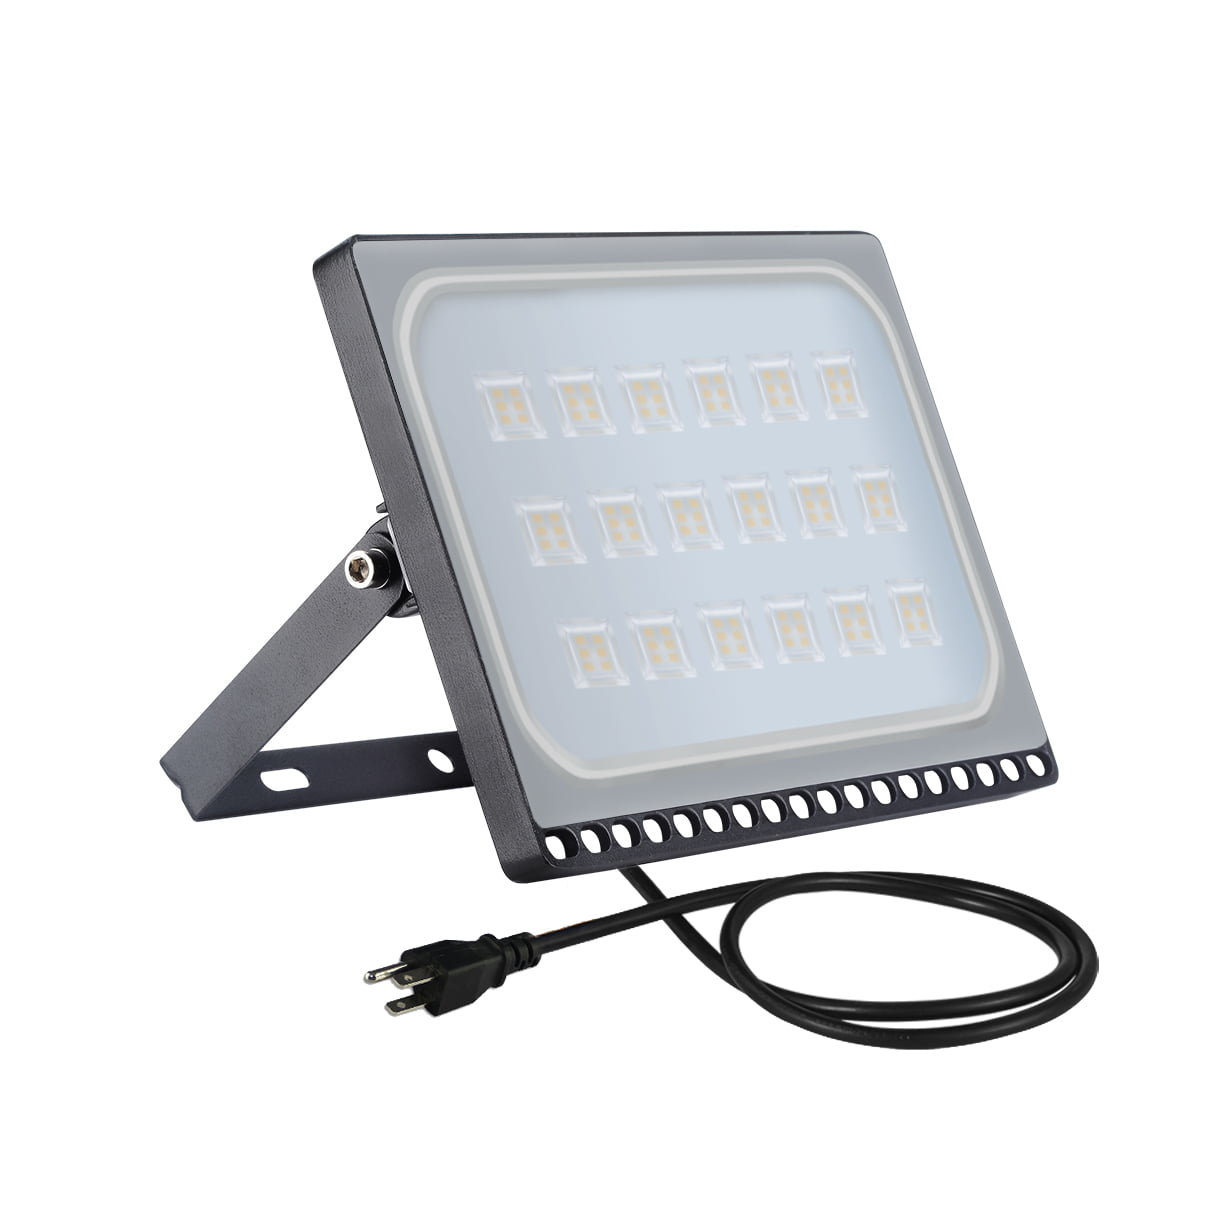 Details about   10W-100W LED Flood Light US Plug Waterproof Spotlight Garden Outdoor Lamp US 